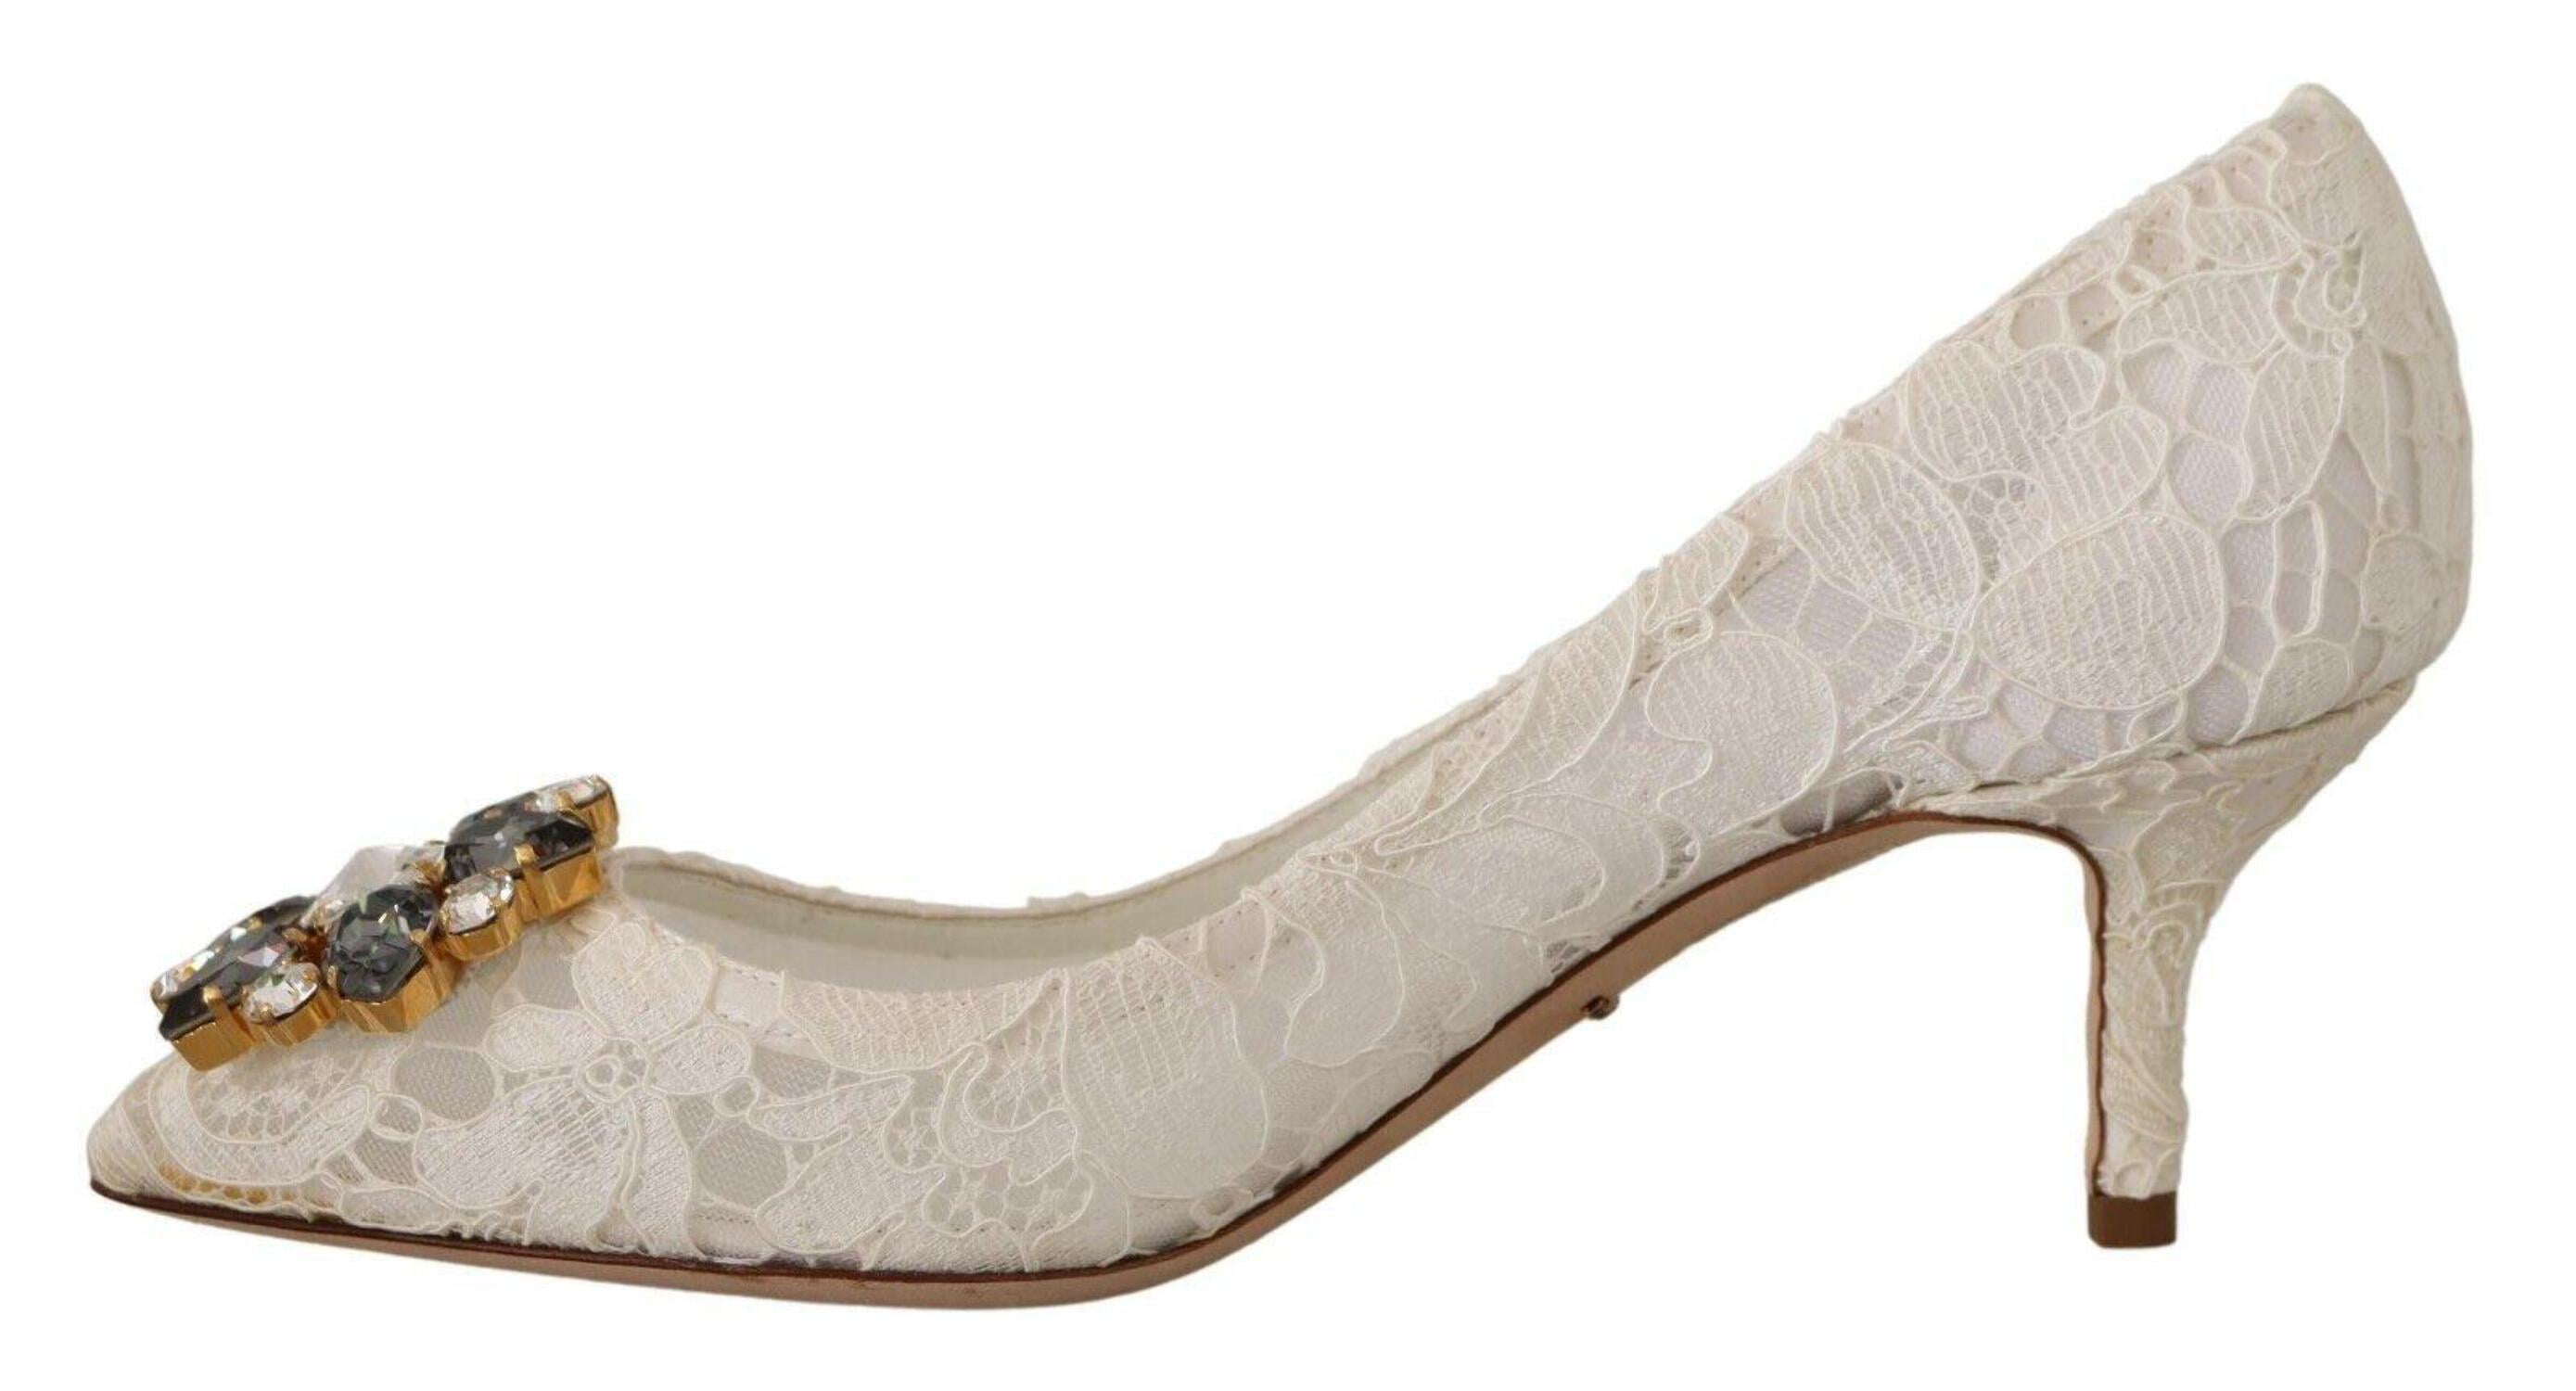 Dolce & Gabbana Snake Skin Sling-back Heels | Dolce and gabbana, Heels,  Heels shopping